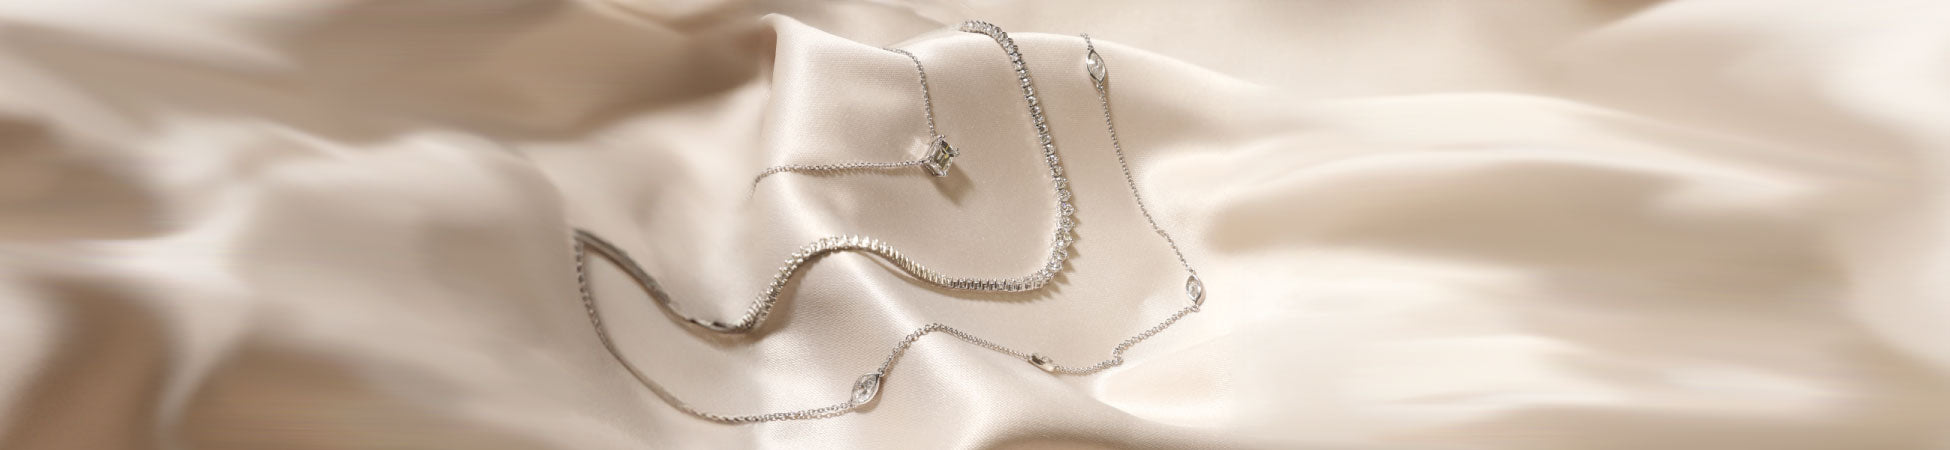 Necklaces | International Diamond Center